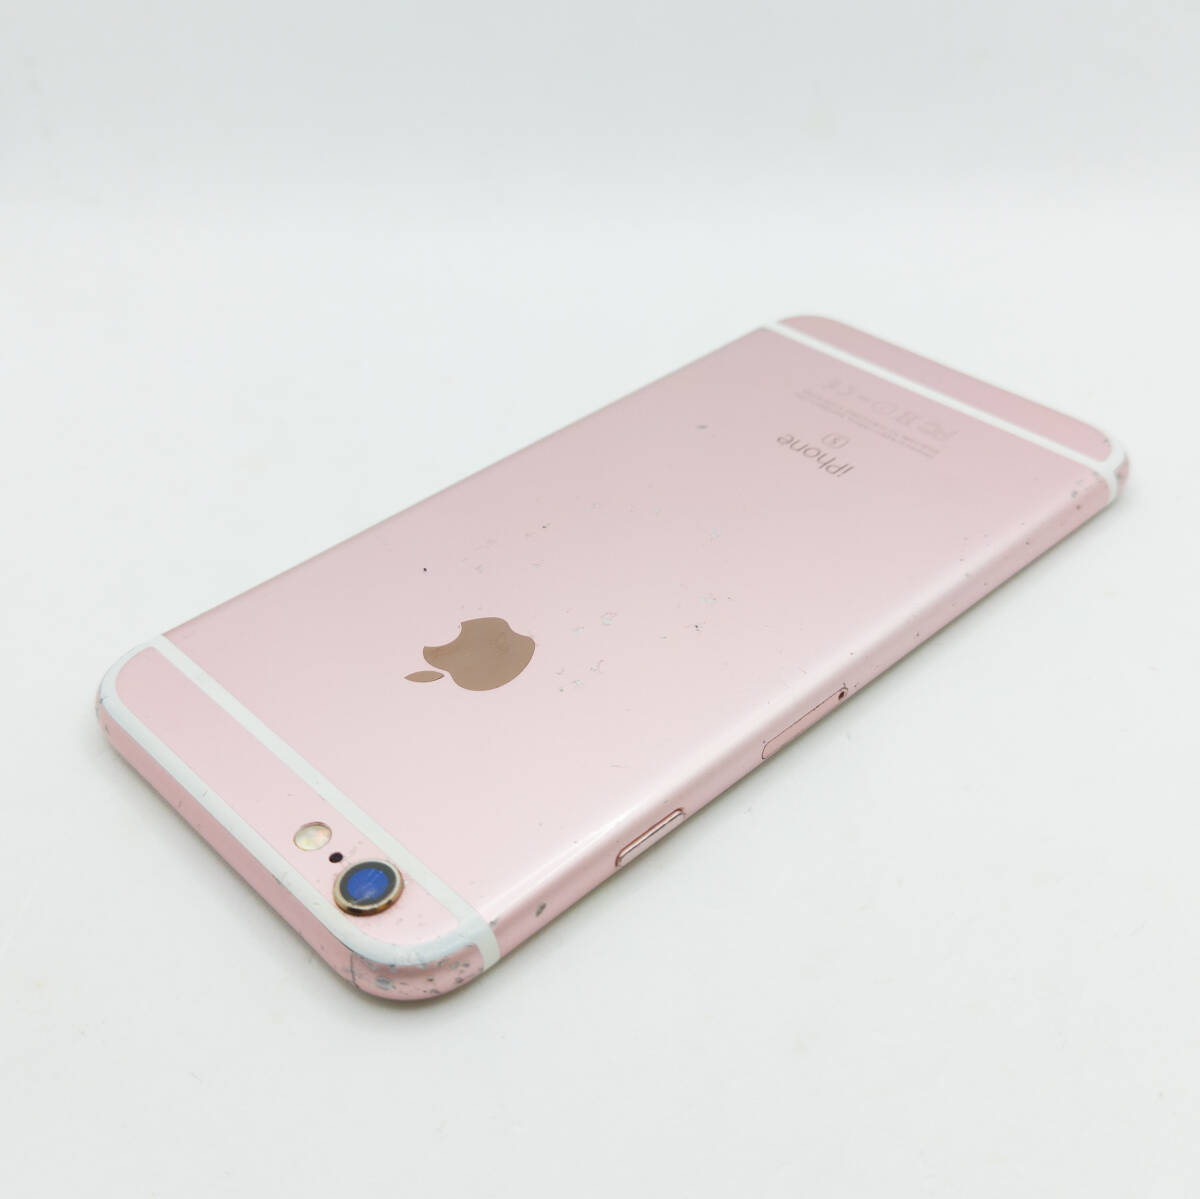 Apple iPhone 6s ローズゴールド 64GB SIMフリー アップル アイフォン A1688 スマートフォン スマホ 携帯電話 本体 #ST-02987